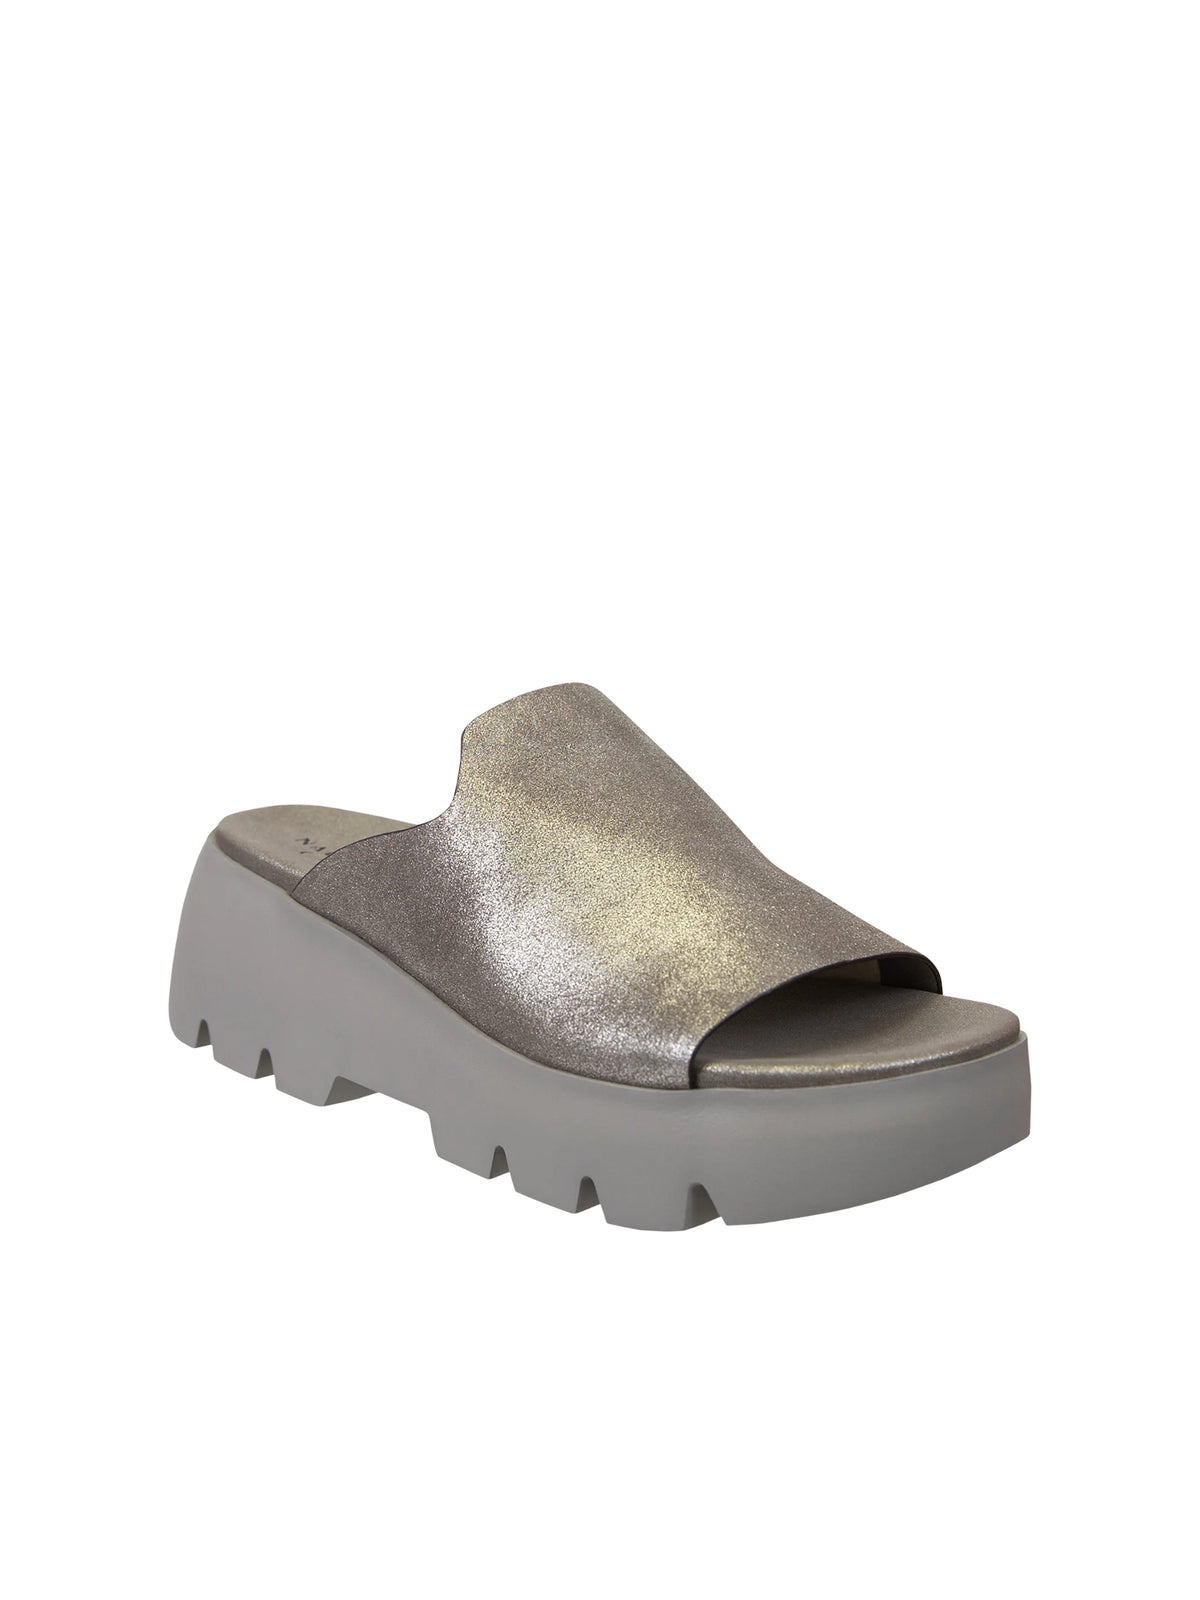 naked feet drift platform sandal in silver-angled view